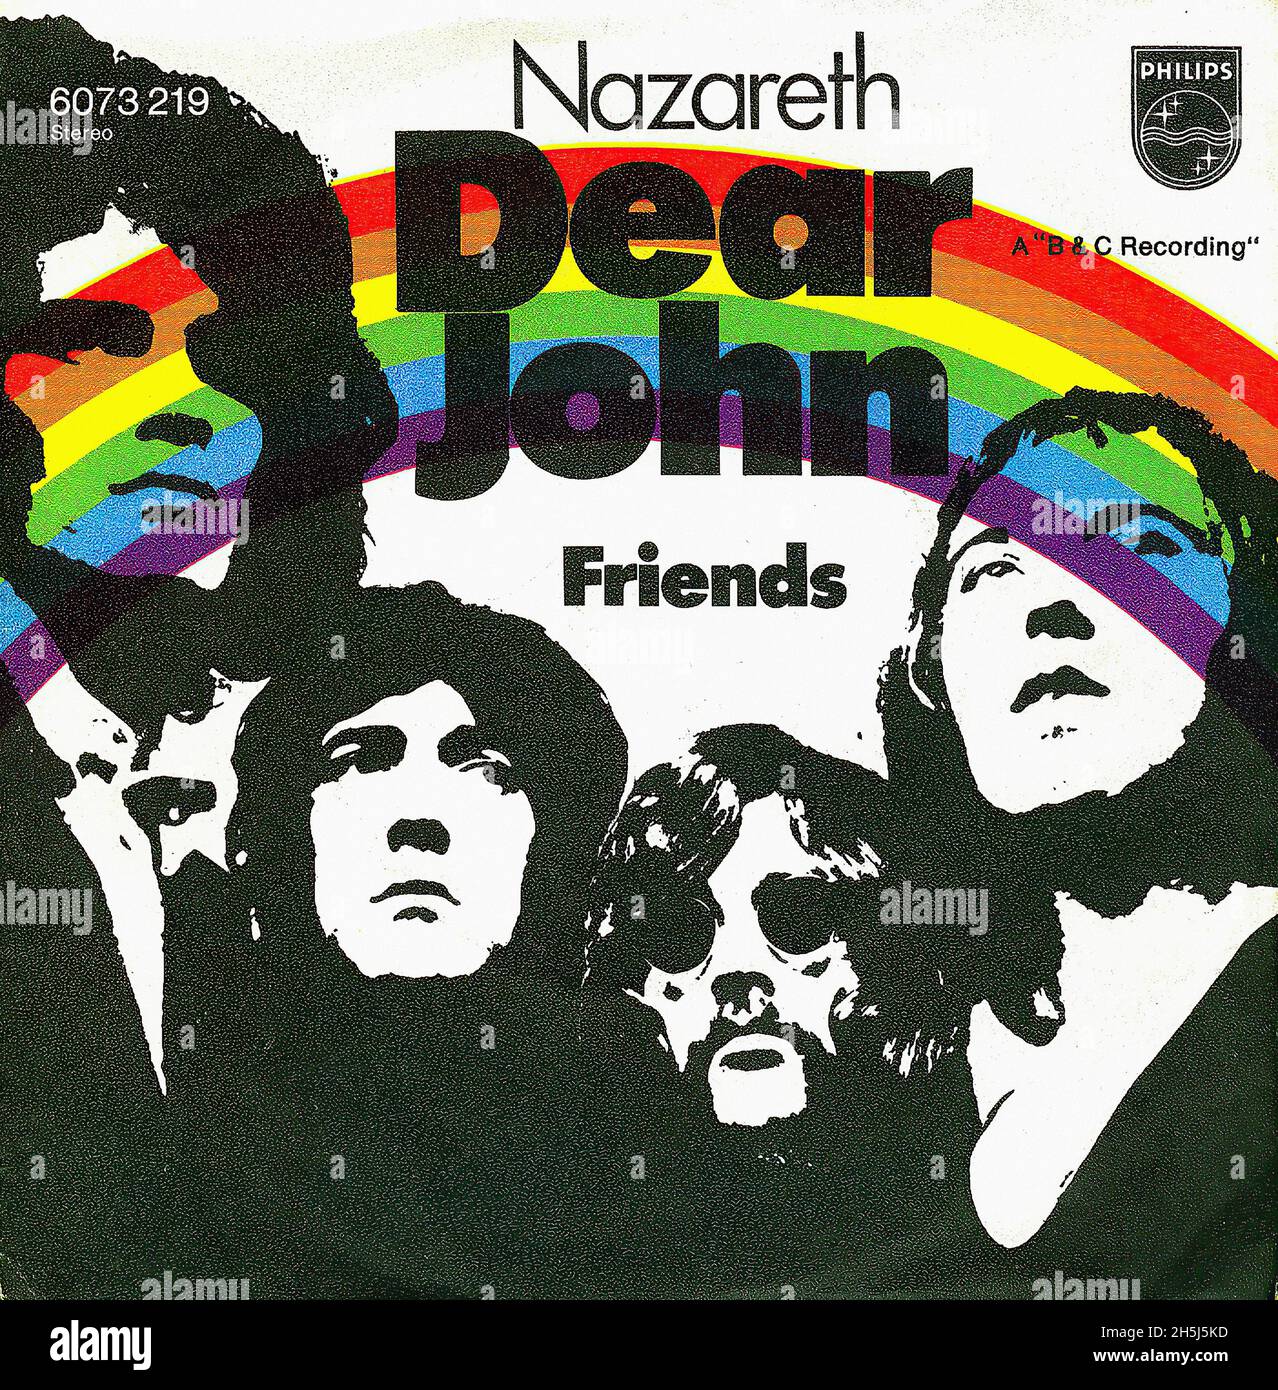 Nazareth nazareth треки. Nazareth Nazareth 1971. Группа Nazareth 1971. Nazareth Dear John. Nazareth "the Singles".